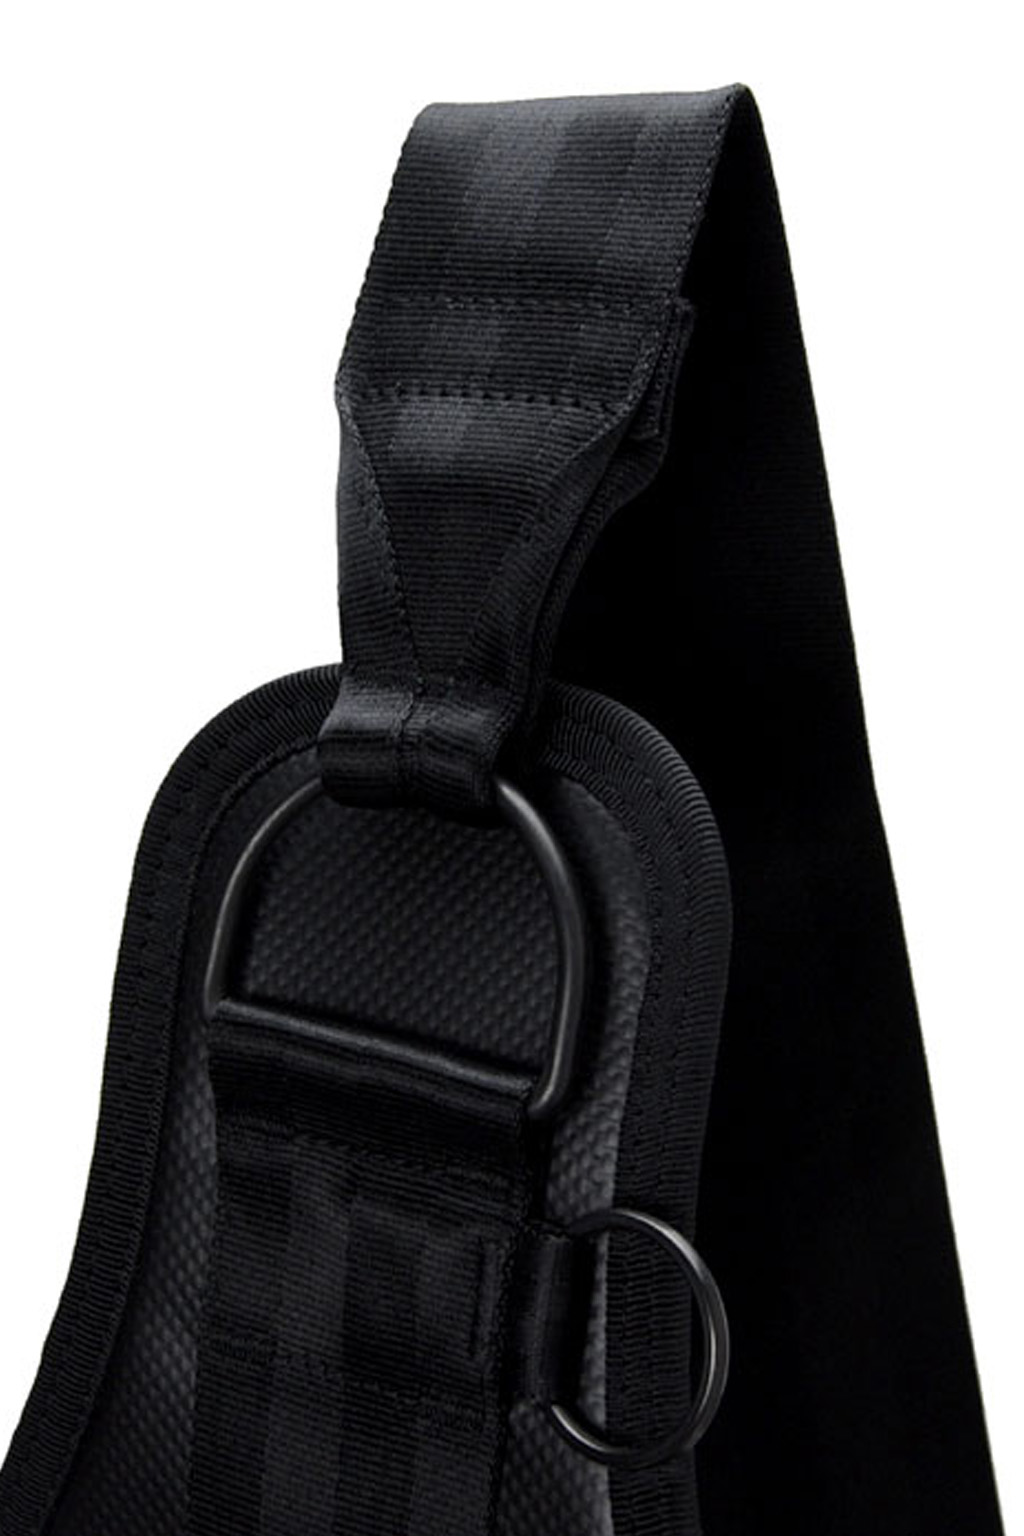 Porter Yoshida Heat - Sling Shoulder Bag - Black